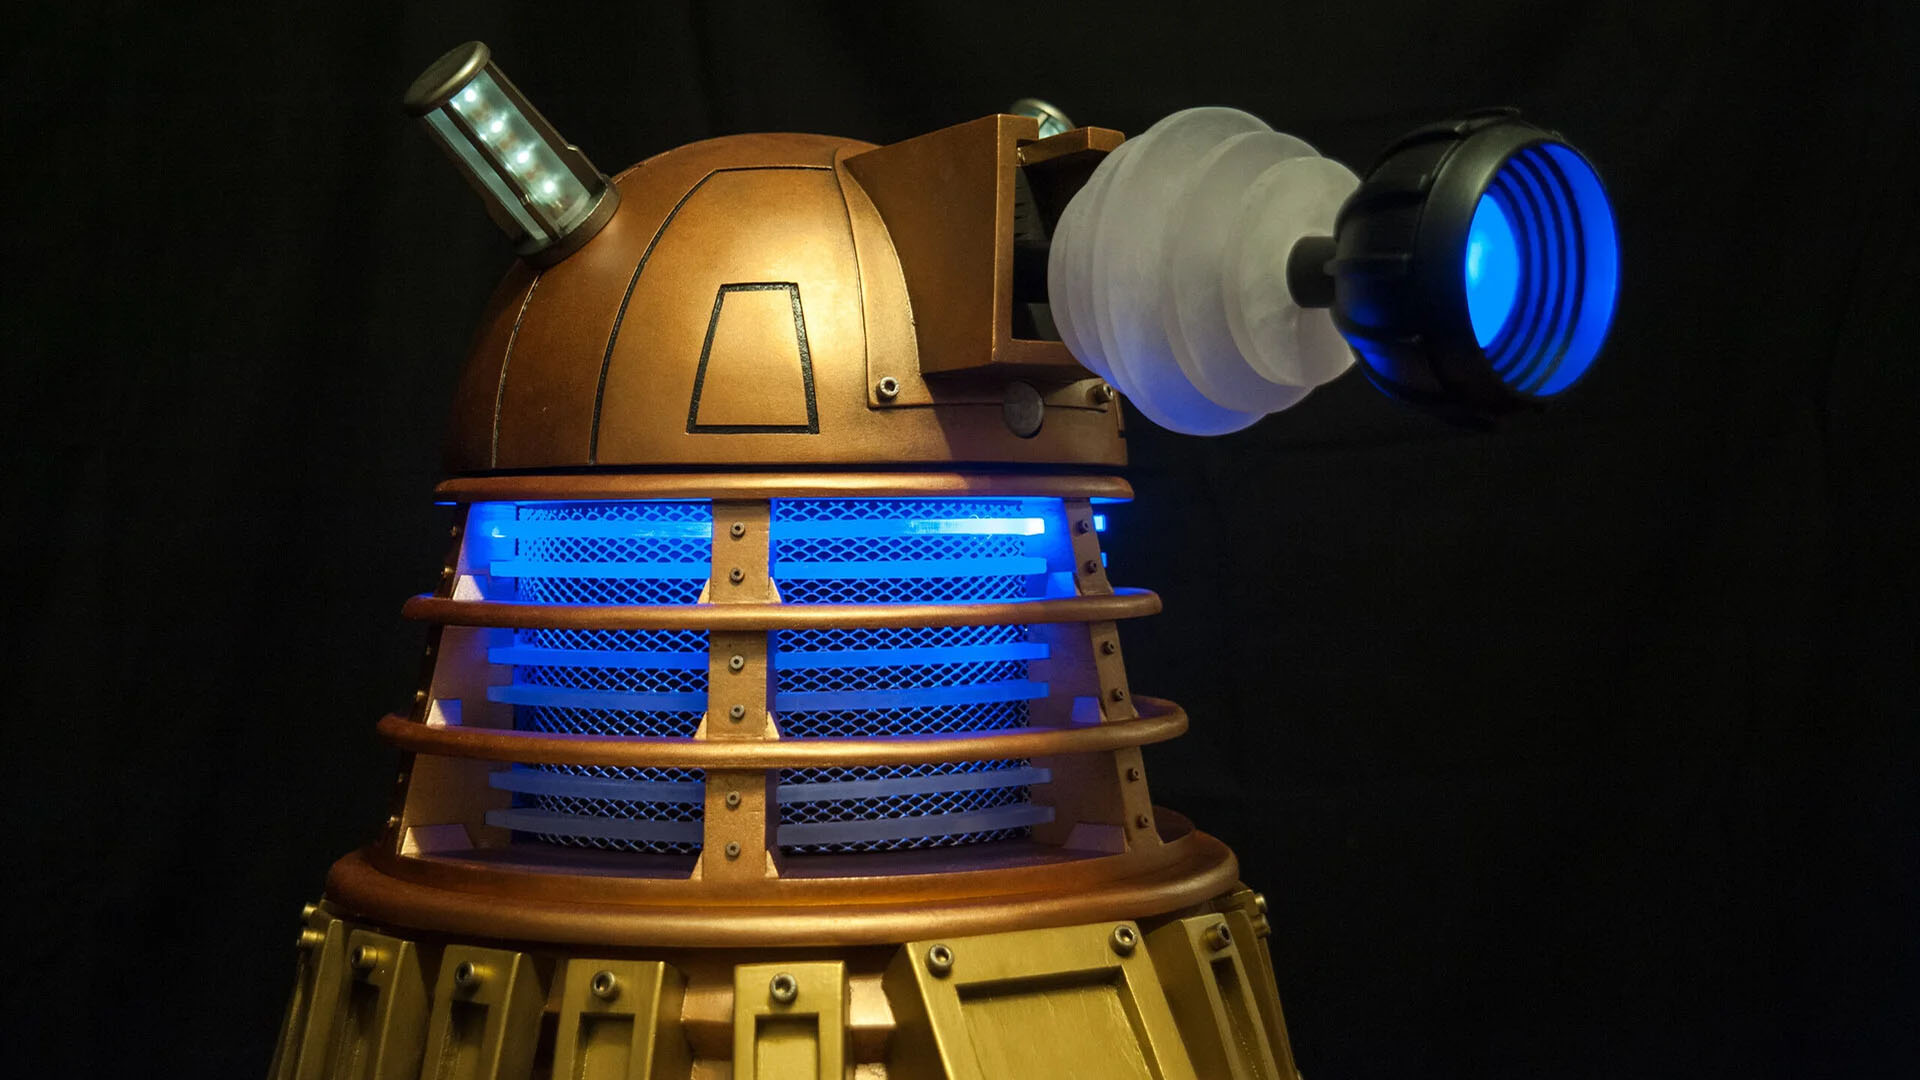 Doctor Who Dalek gaming PC: Head closeup